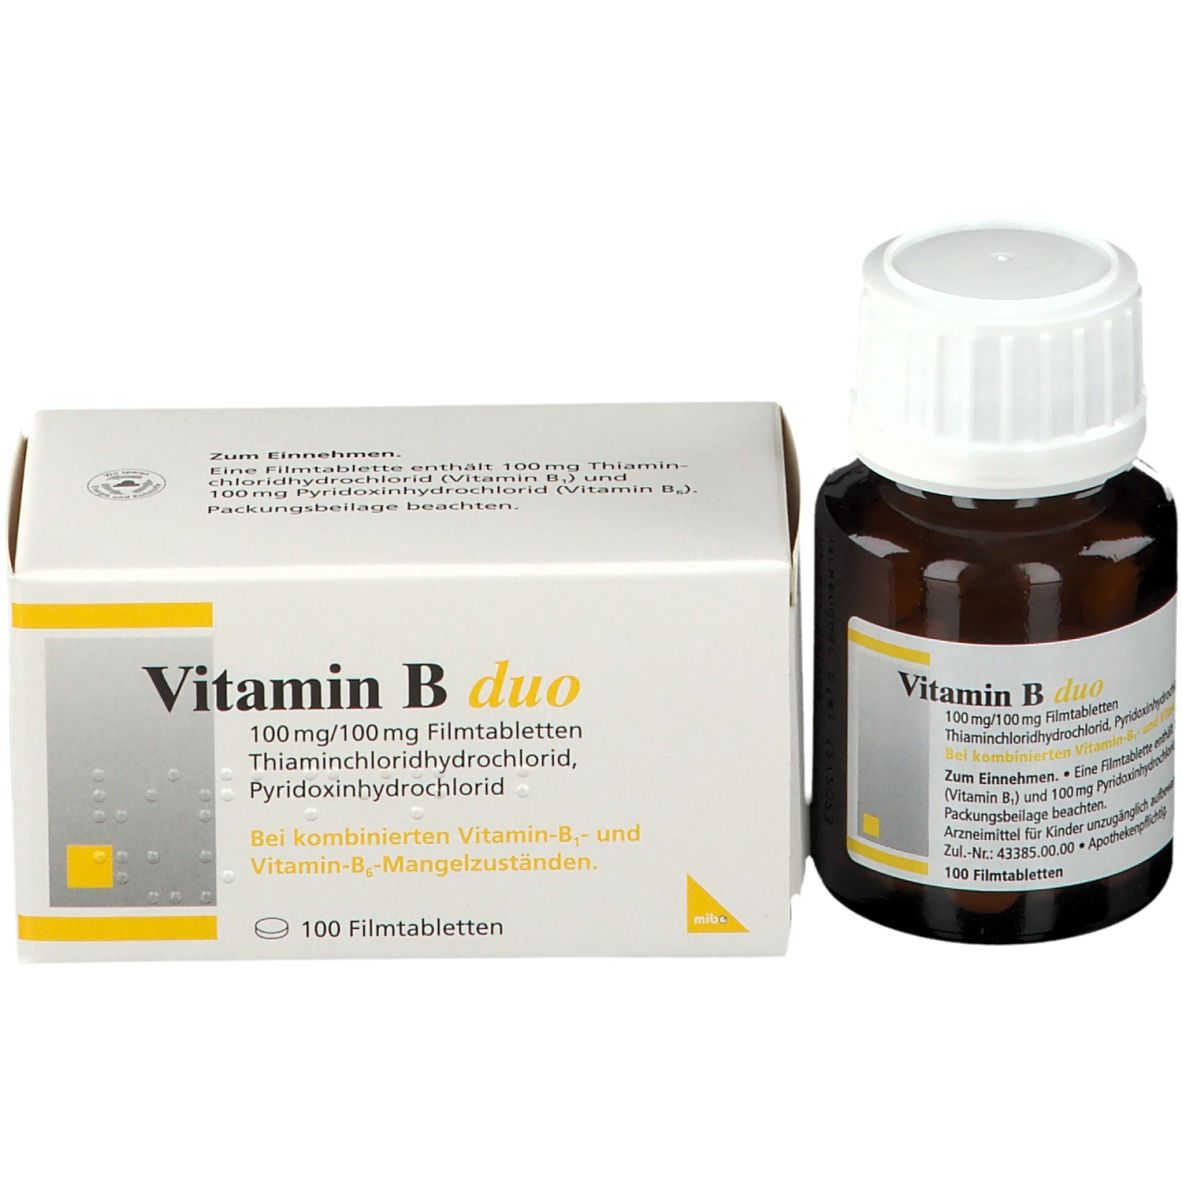 Vitamin B duo®